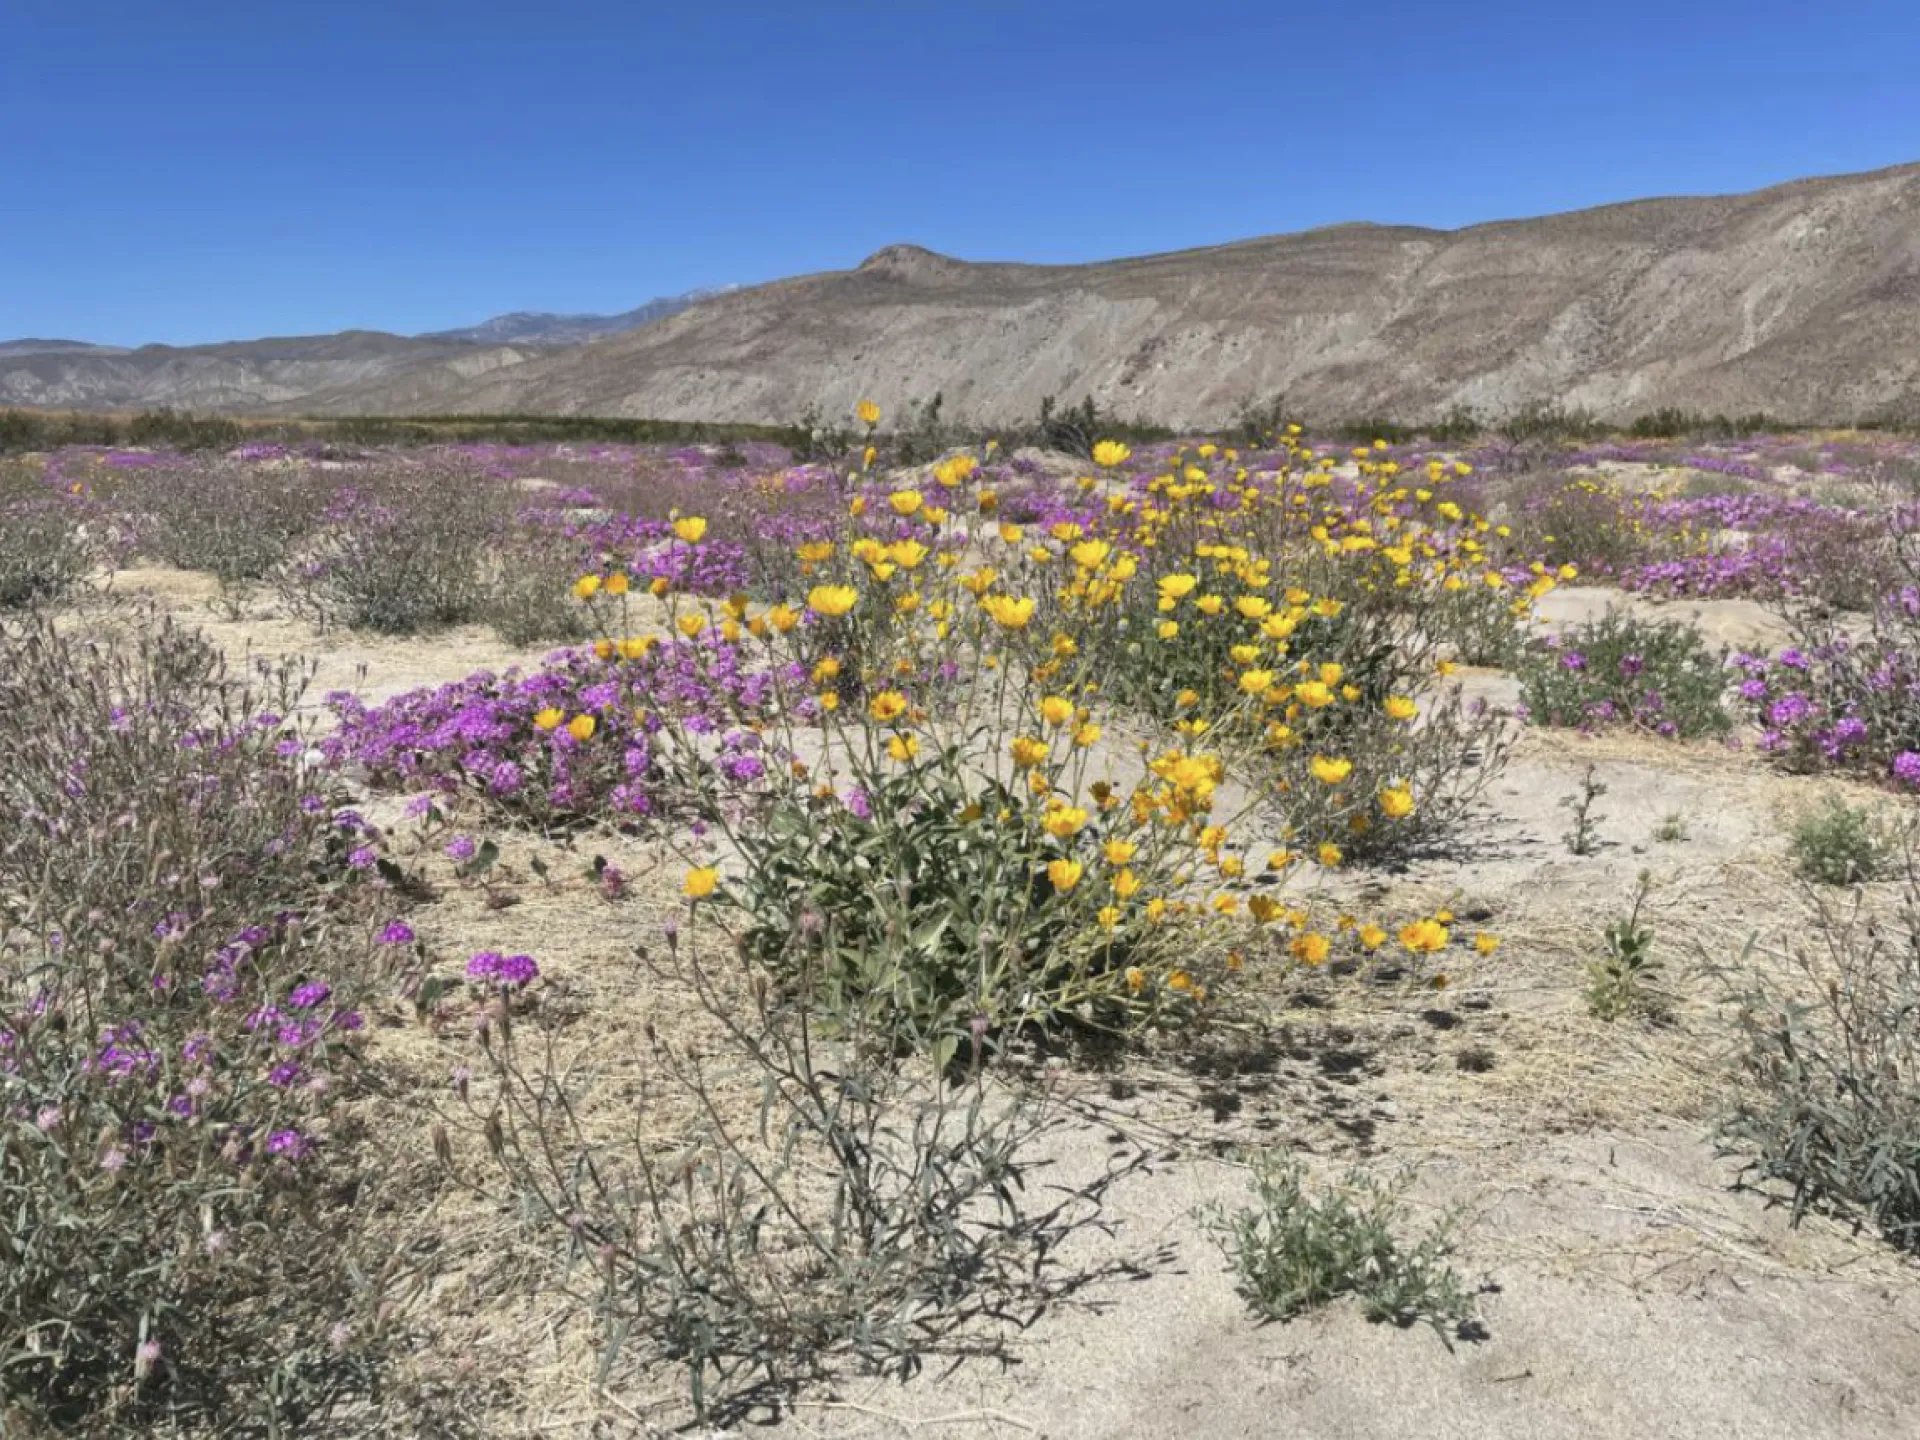 Wildflowers blooming in Anza-Borrego Desert. Taken by Sue Mazingo.